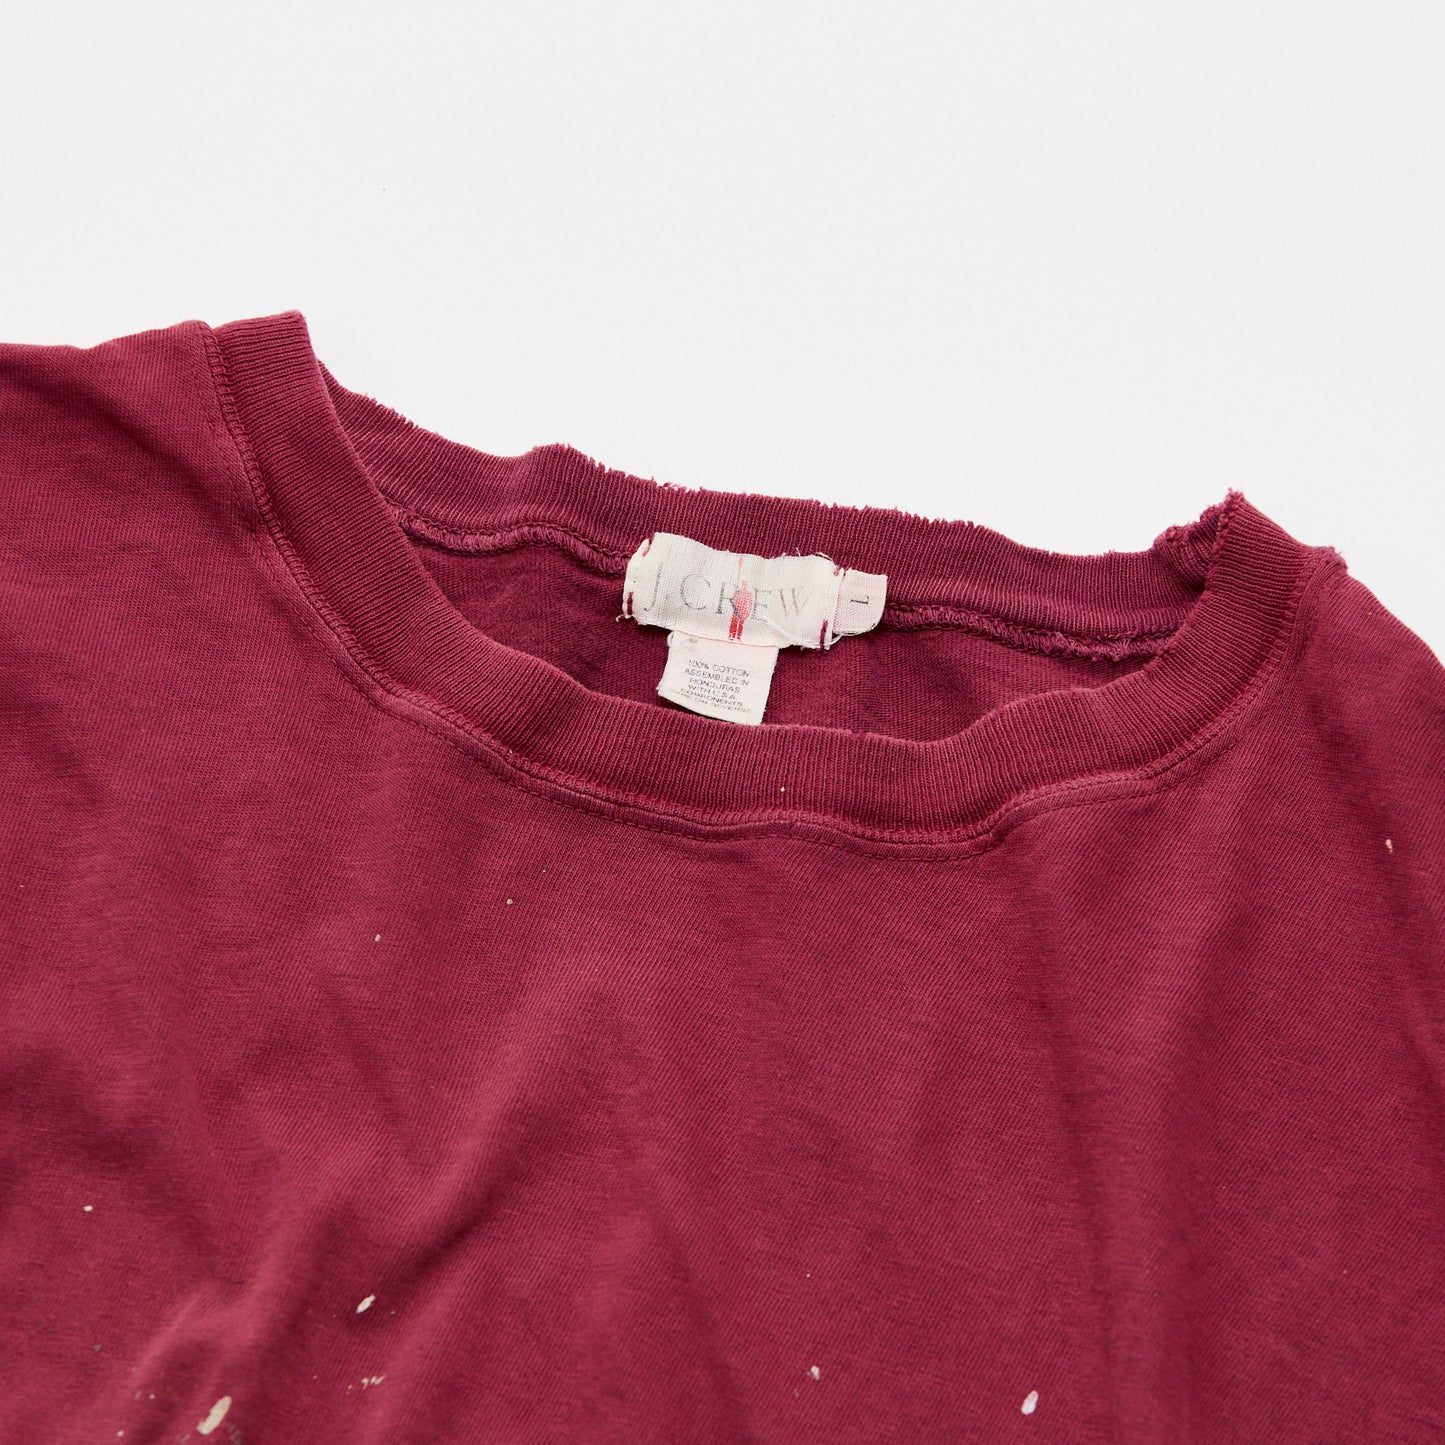 J.Crew paint-splattered t-shirt